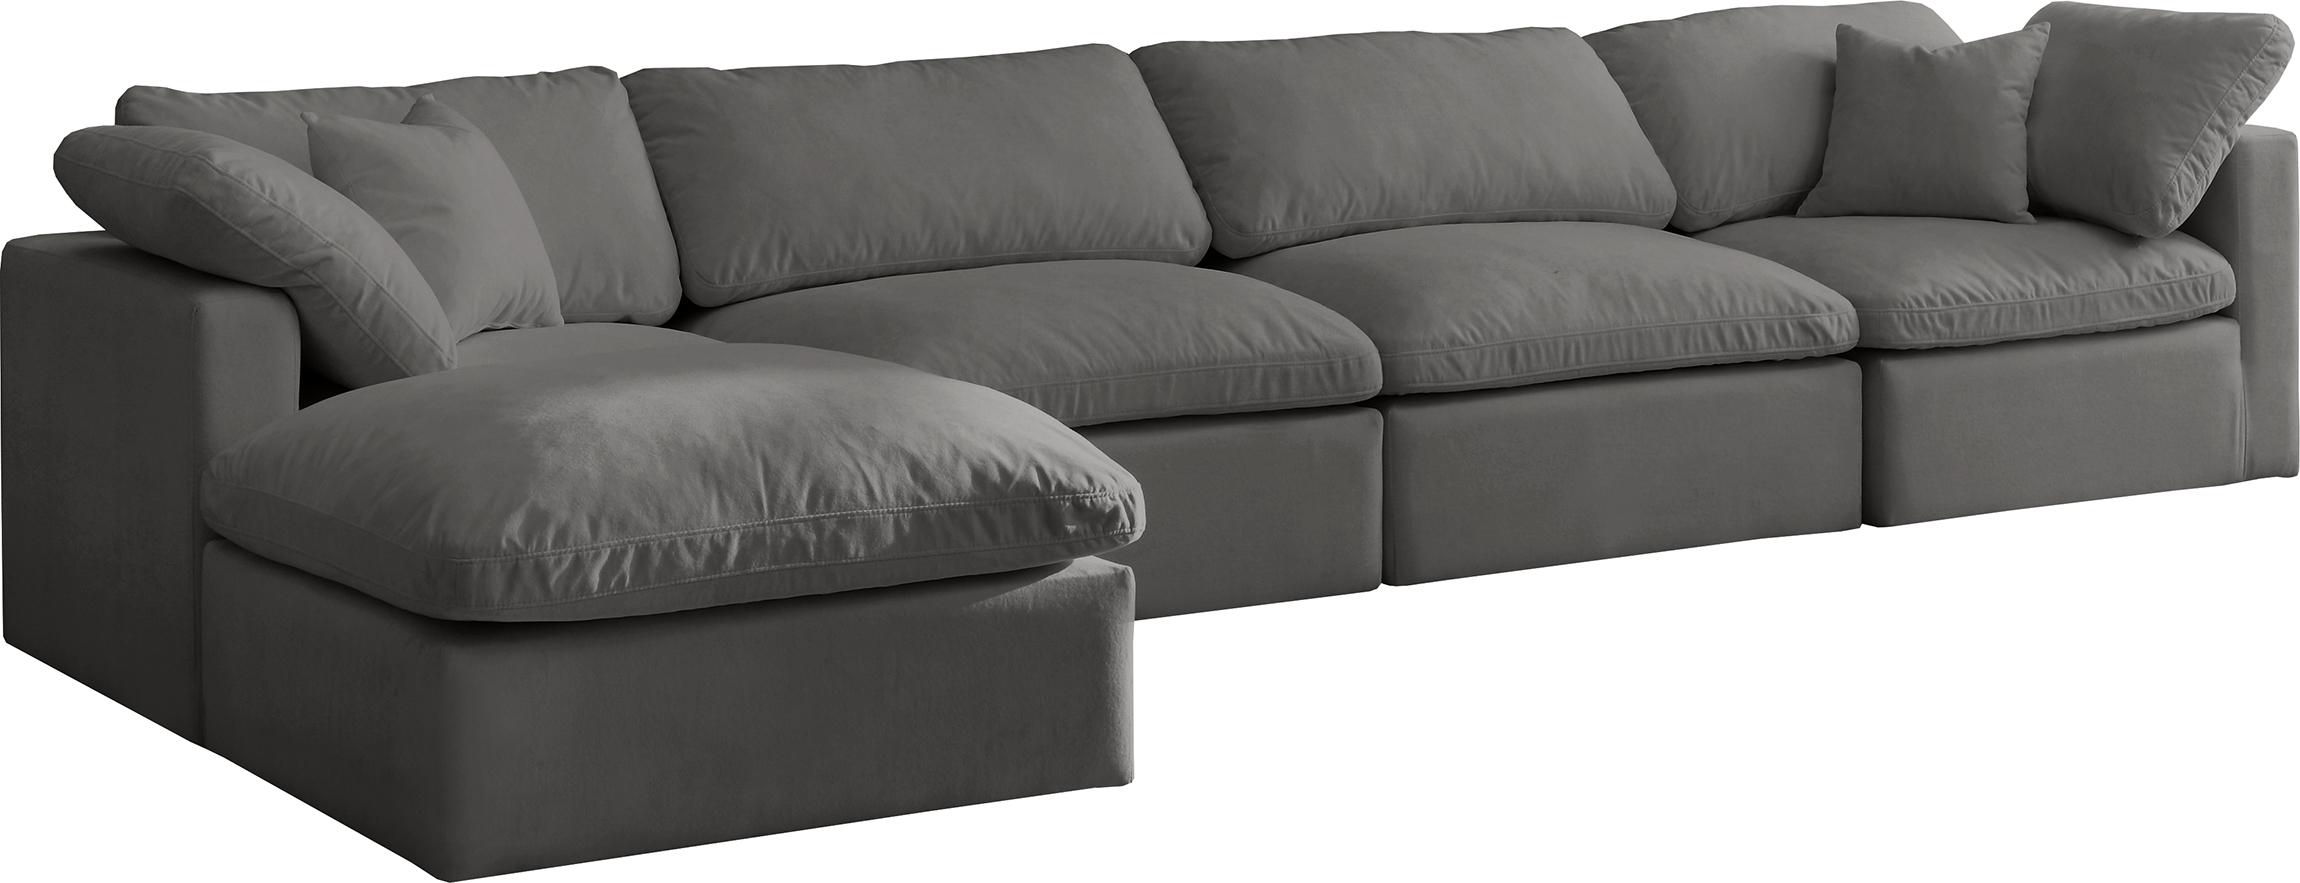 Contemporary, Modern Modular Sectional Sofa 602Grey-Sec5A 602Grey-Sec5A in Gray Fabric